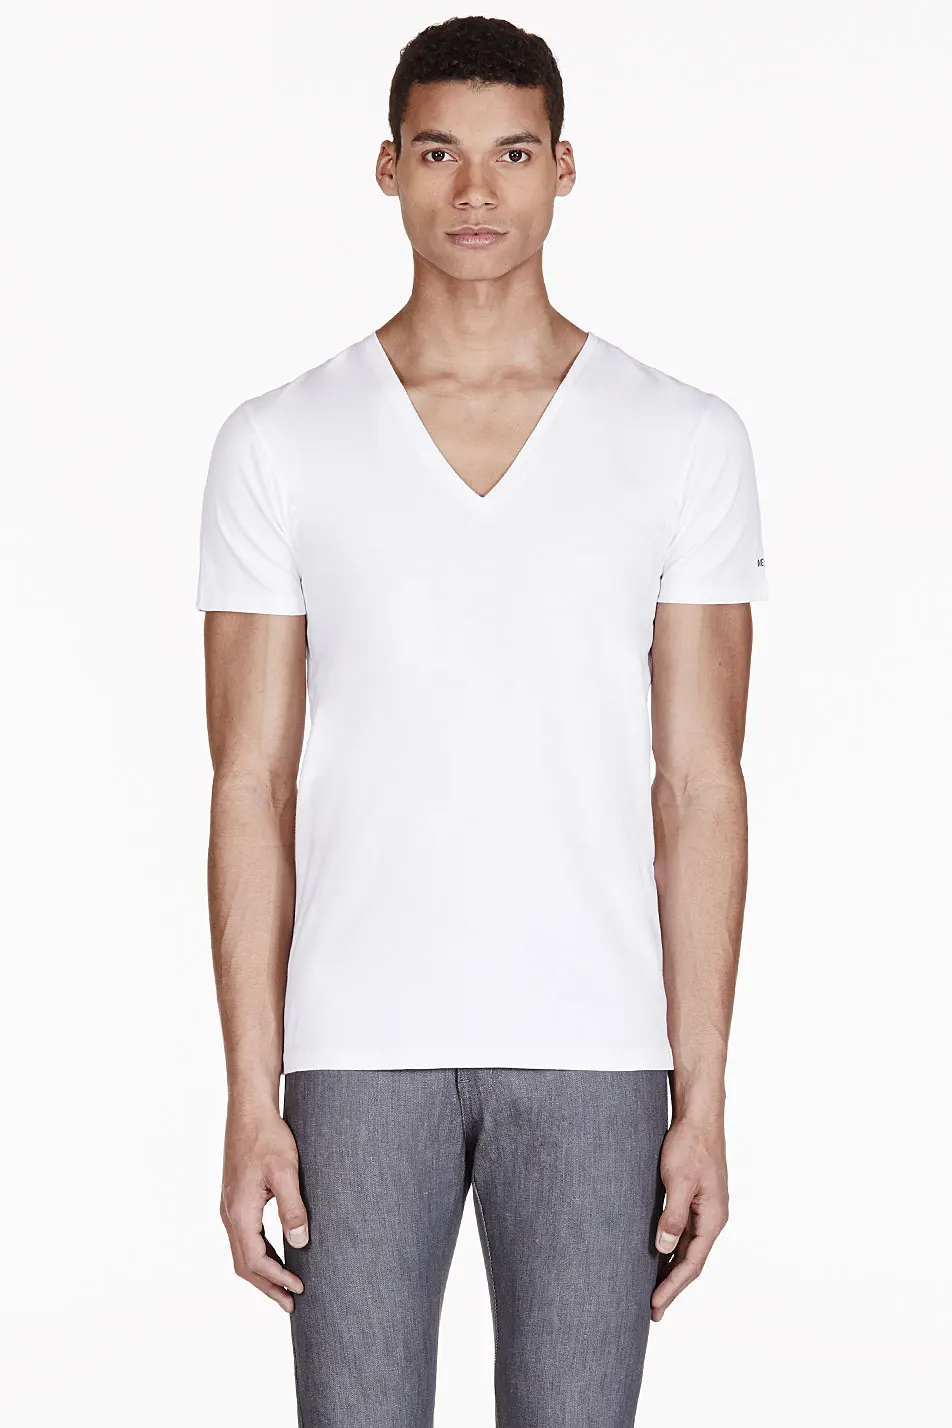 White V-neck 100 Polyester T Shirts Wholesale - Buy 100 Polyester T ...